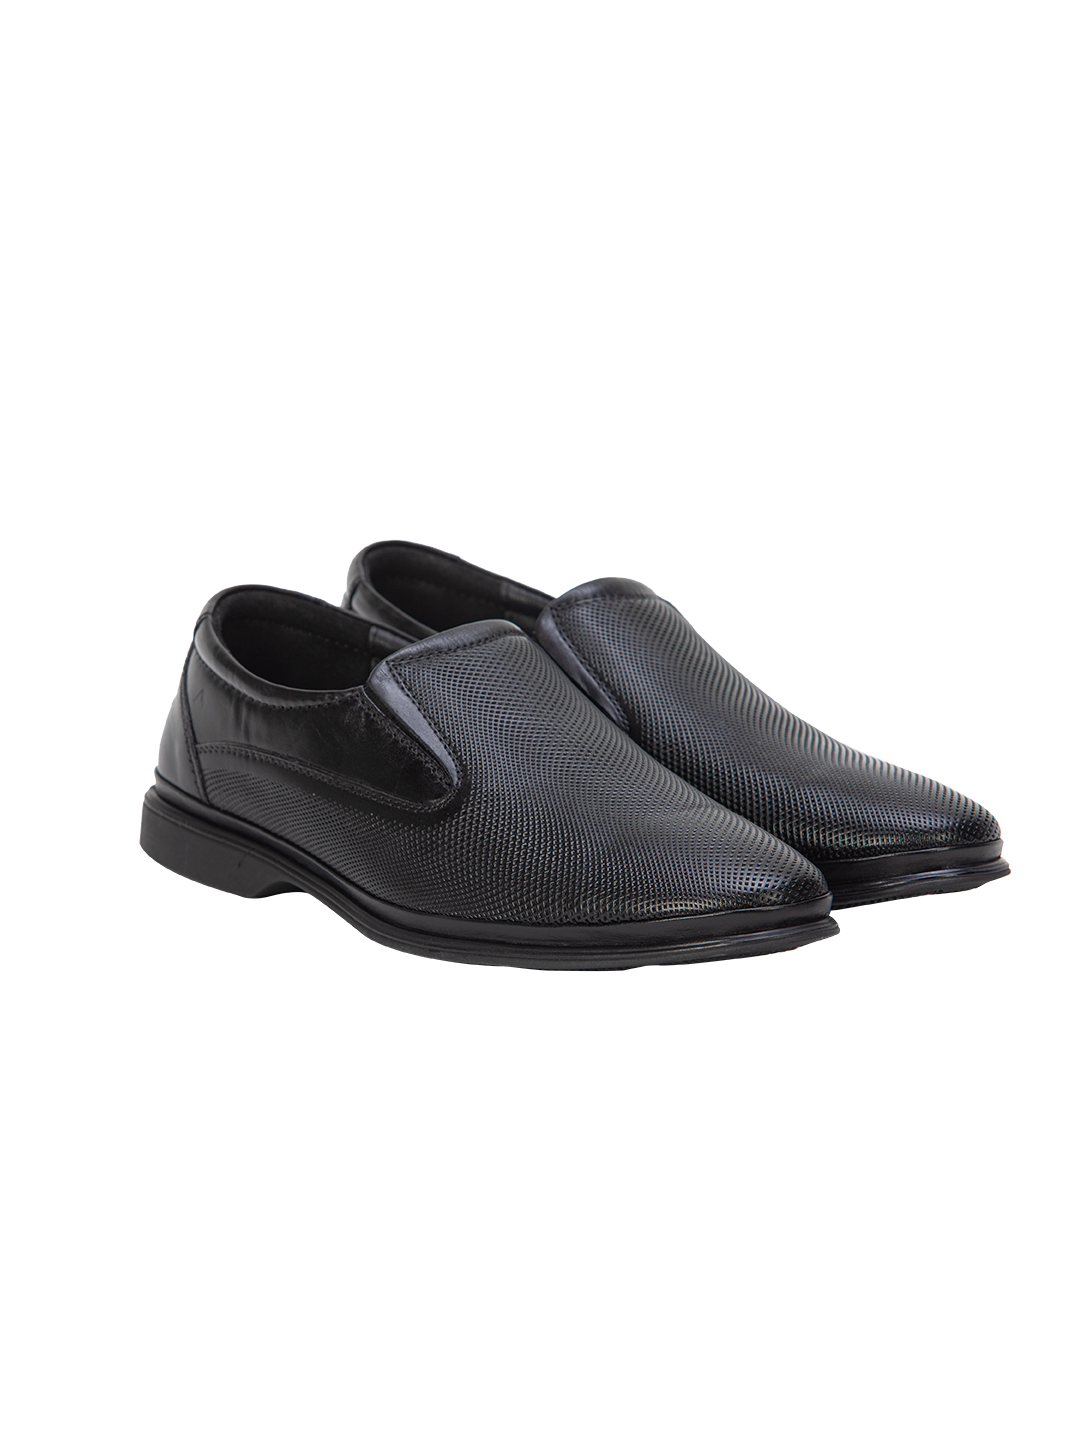 Buy Von Wellx Germany Comfort Mondaine Casual Black Shoes Online in Riyadh